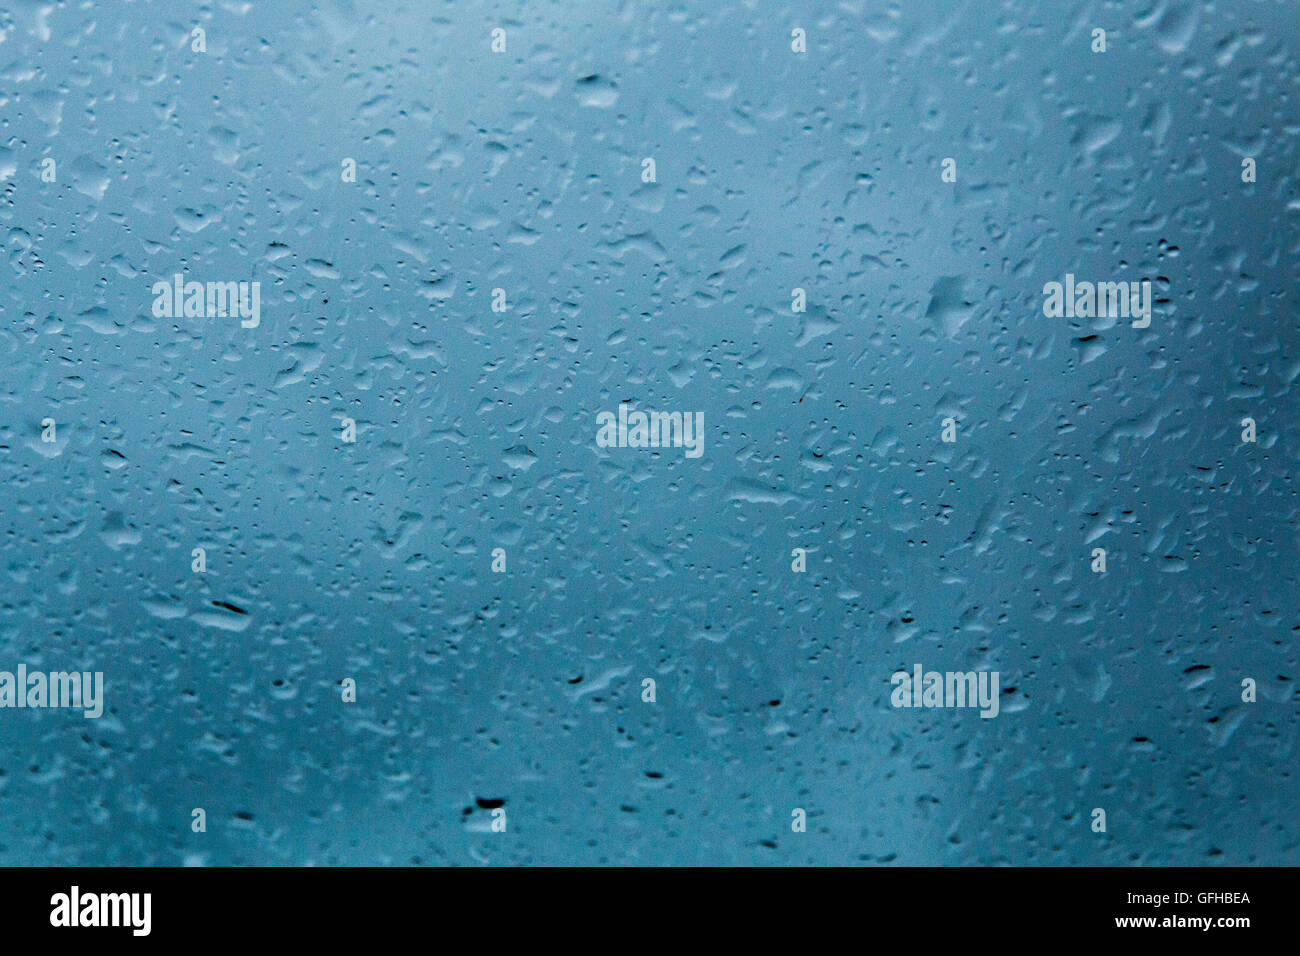 water drops on window pane Stock Photo